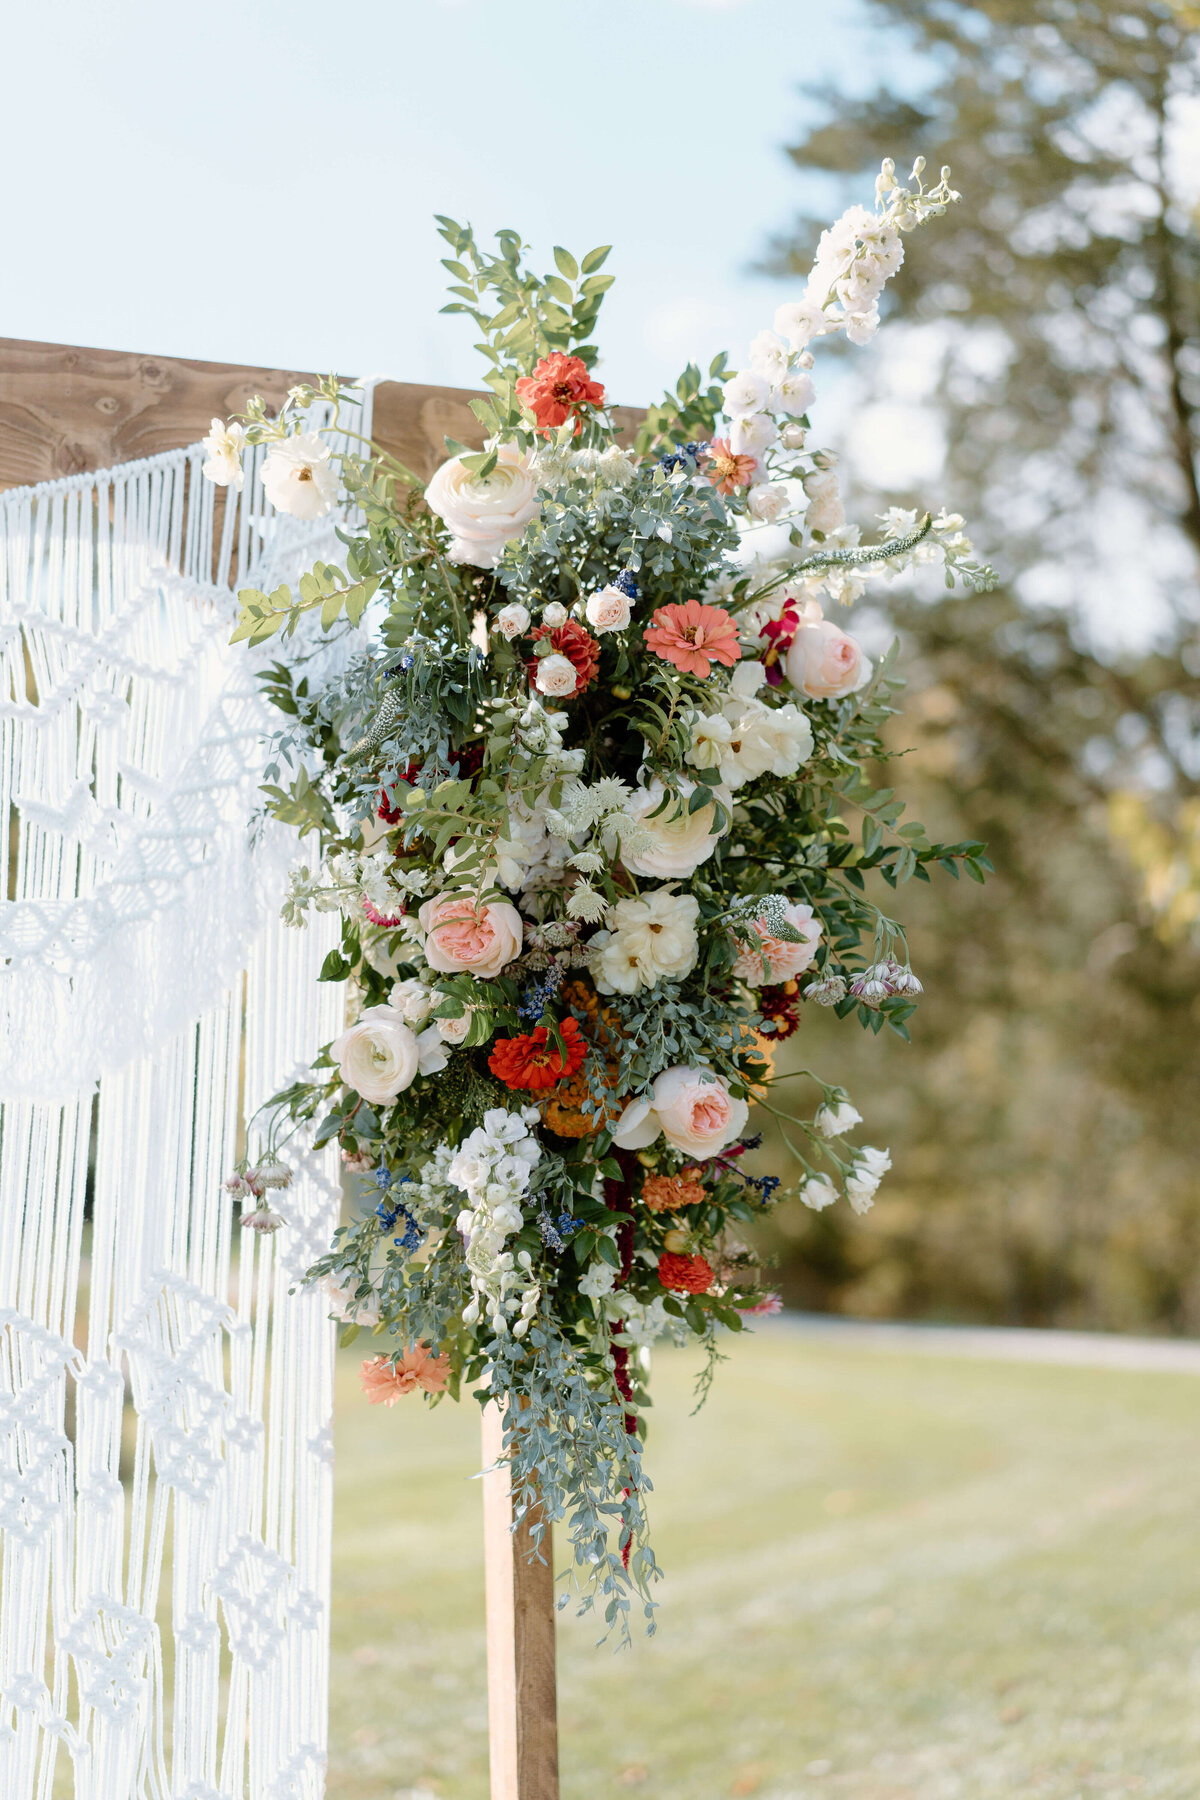 wedding floral display for wedding ceremony centerpiece